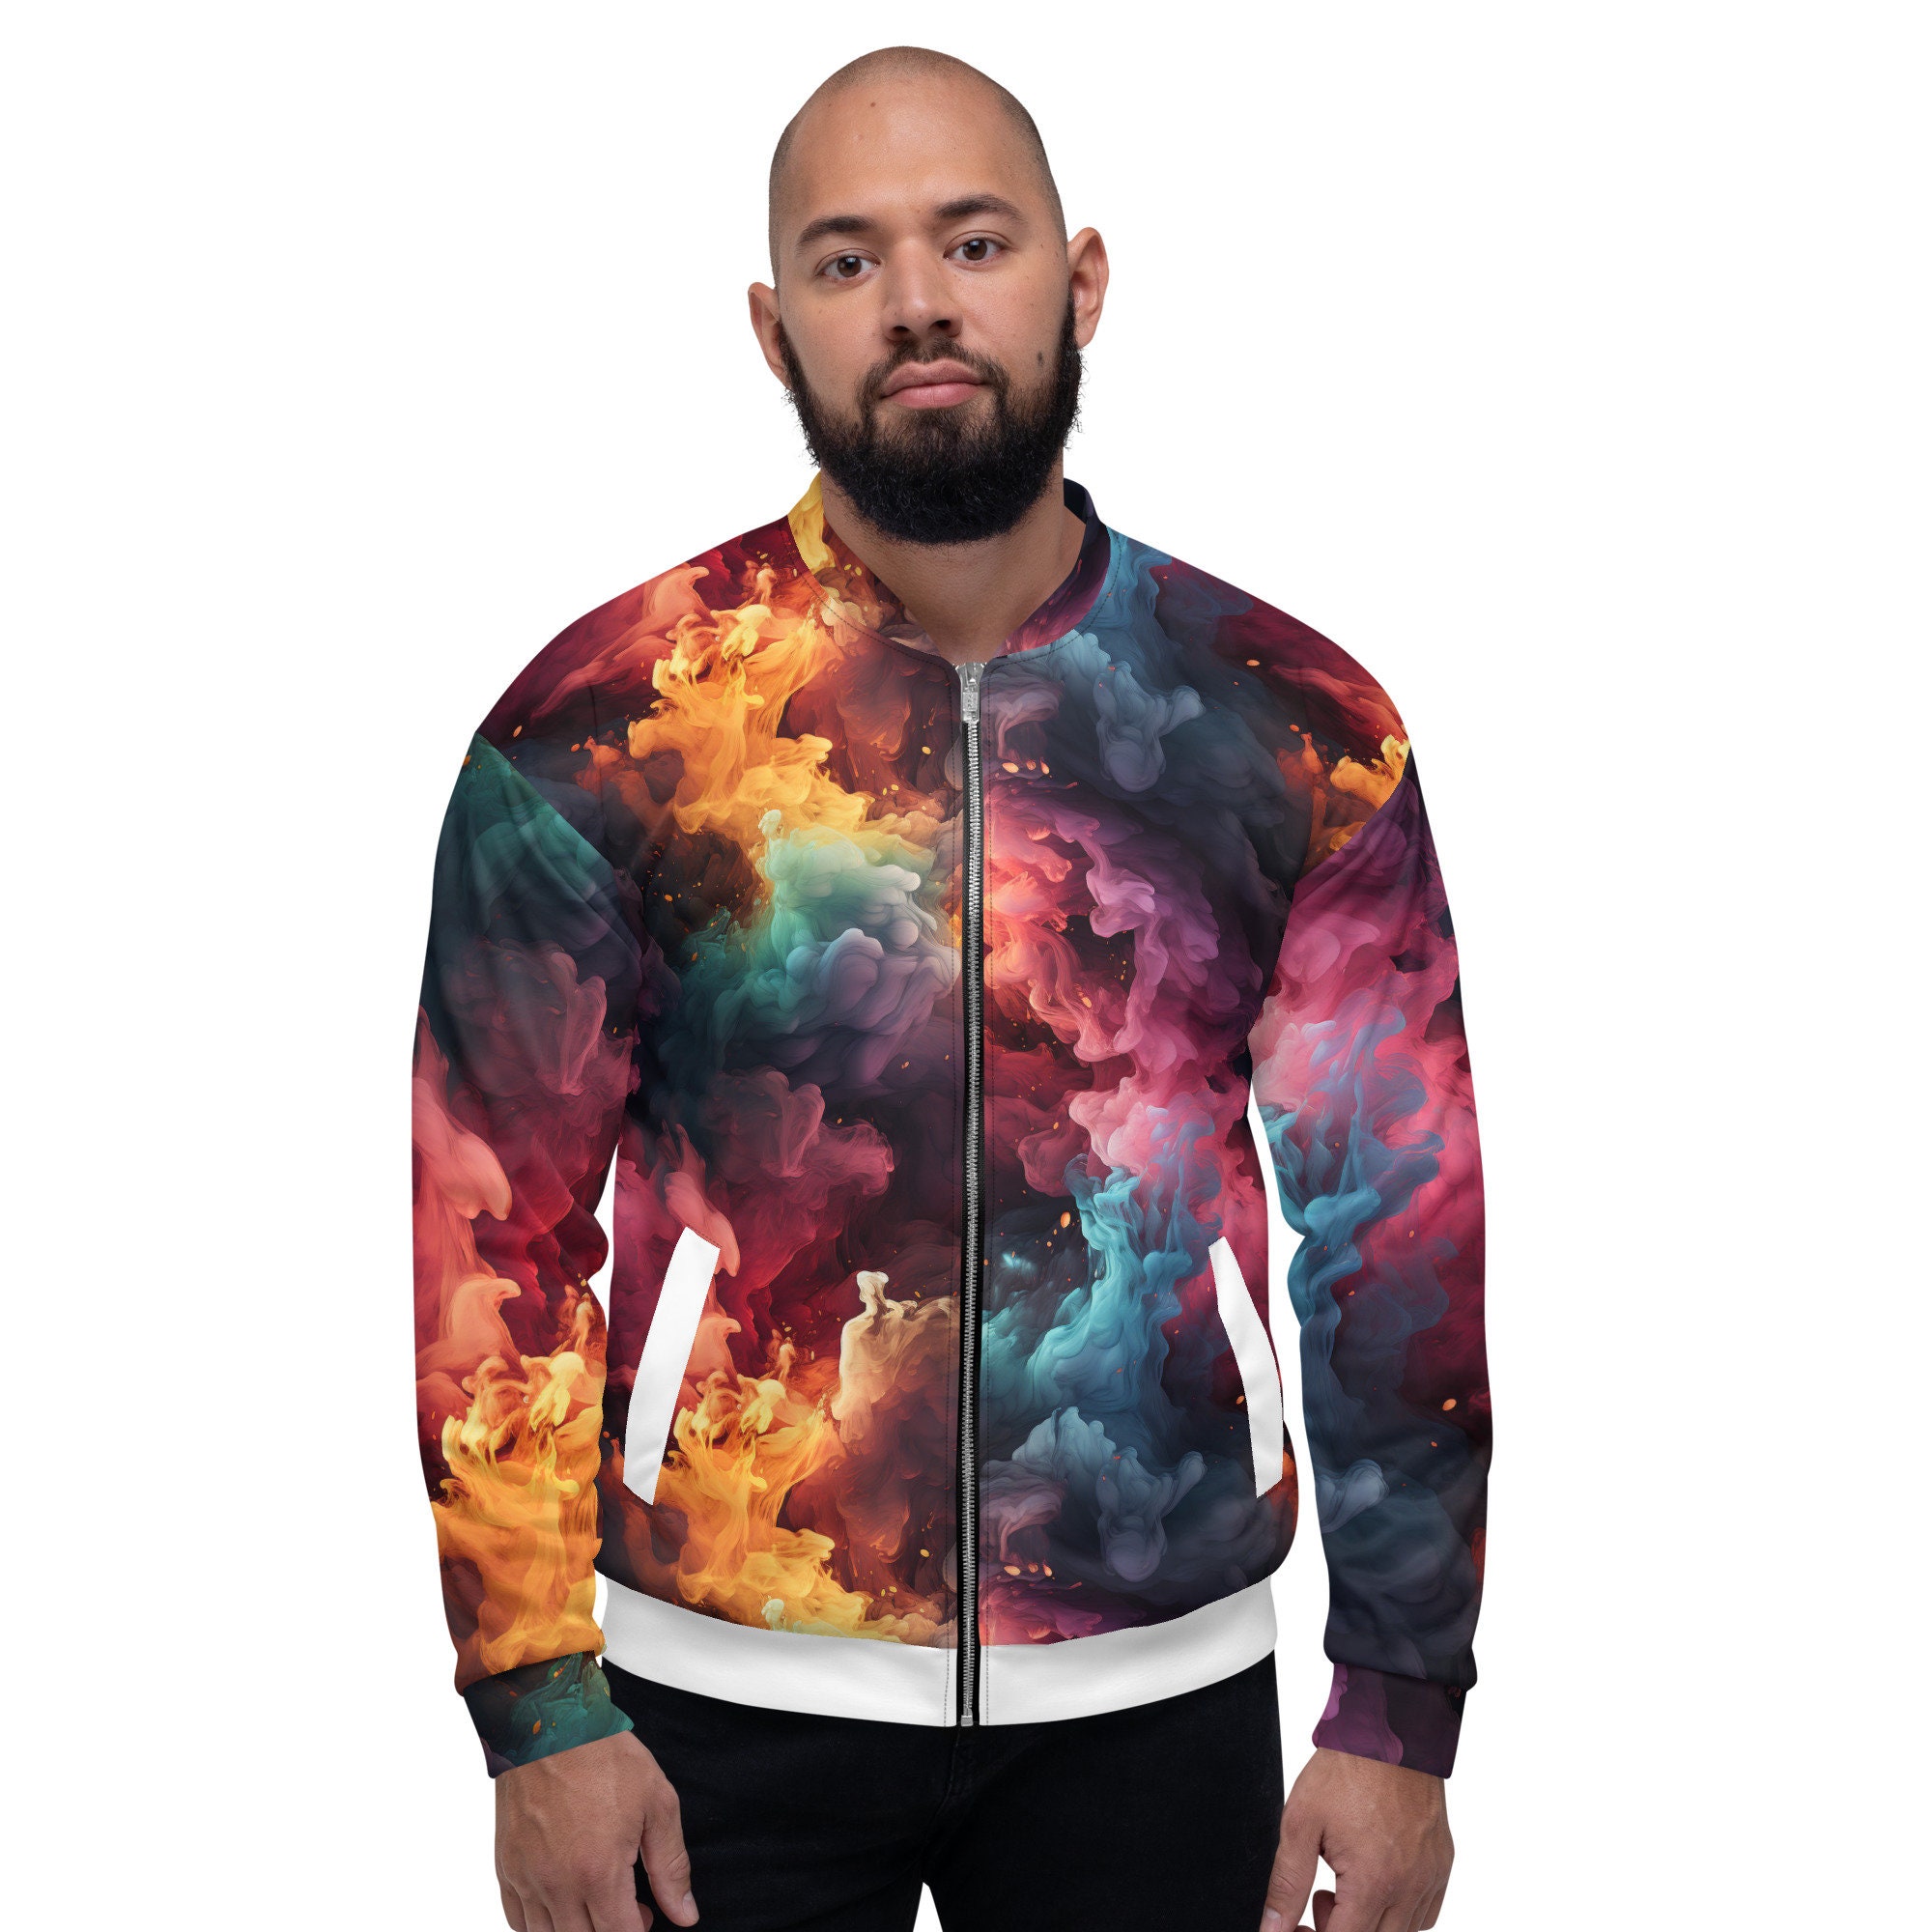 ColorSplashIllusions Unisex Bomber Jacket with Ethereal Cloud of Smoke & Flames Design - Interstellar nebulae Style